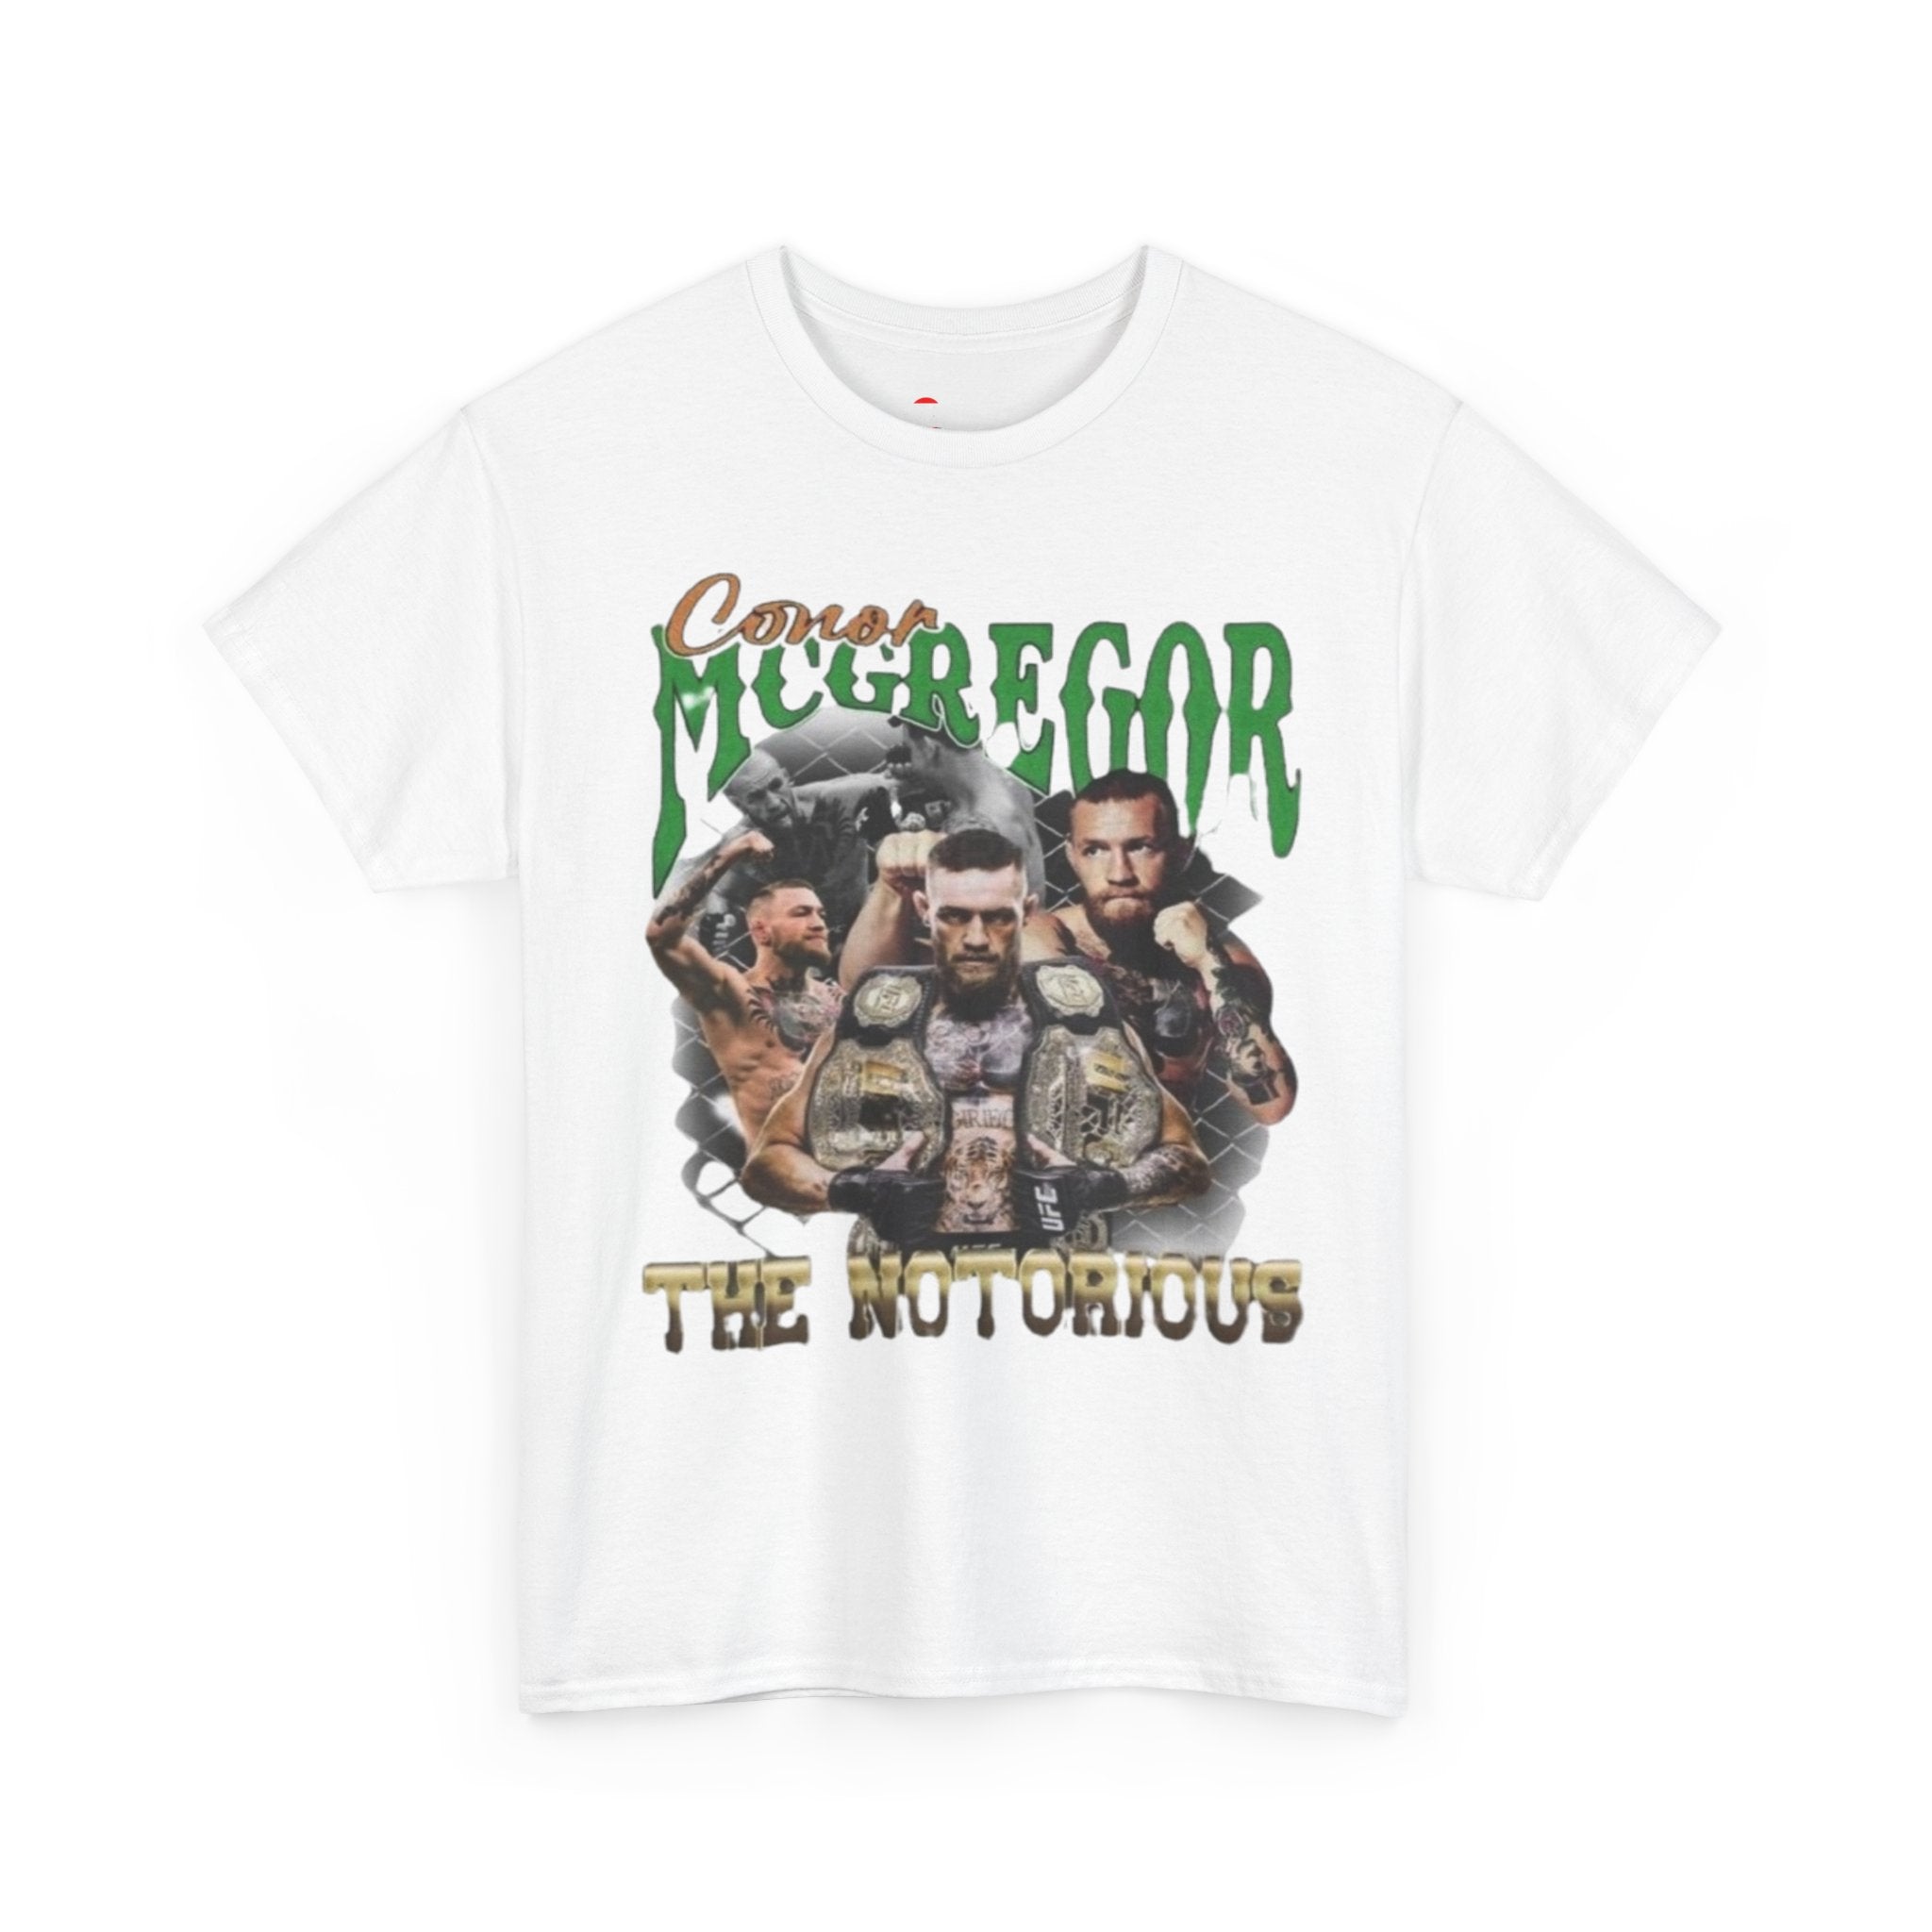 Conor Mcgregor T-shirt